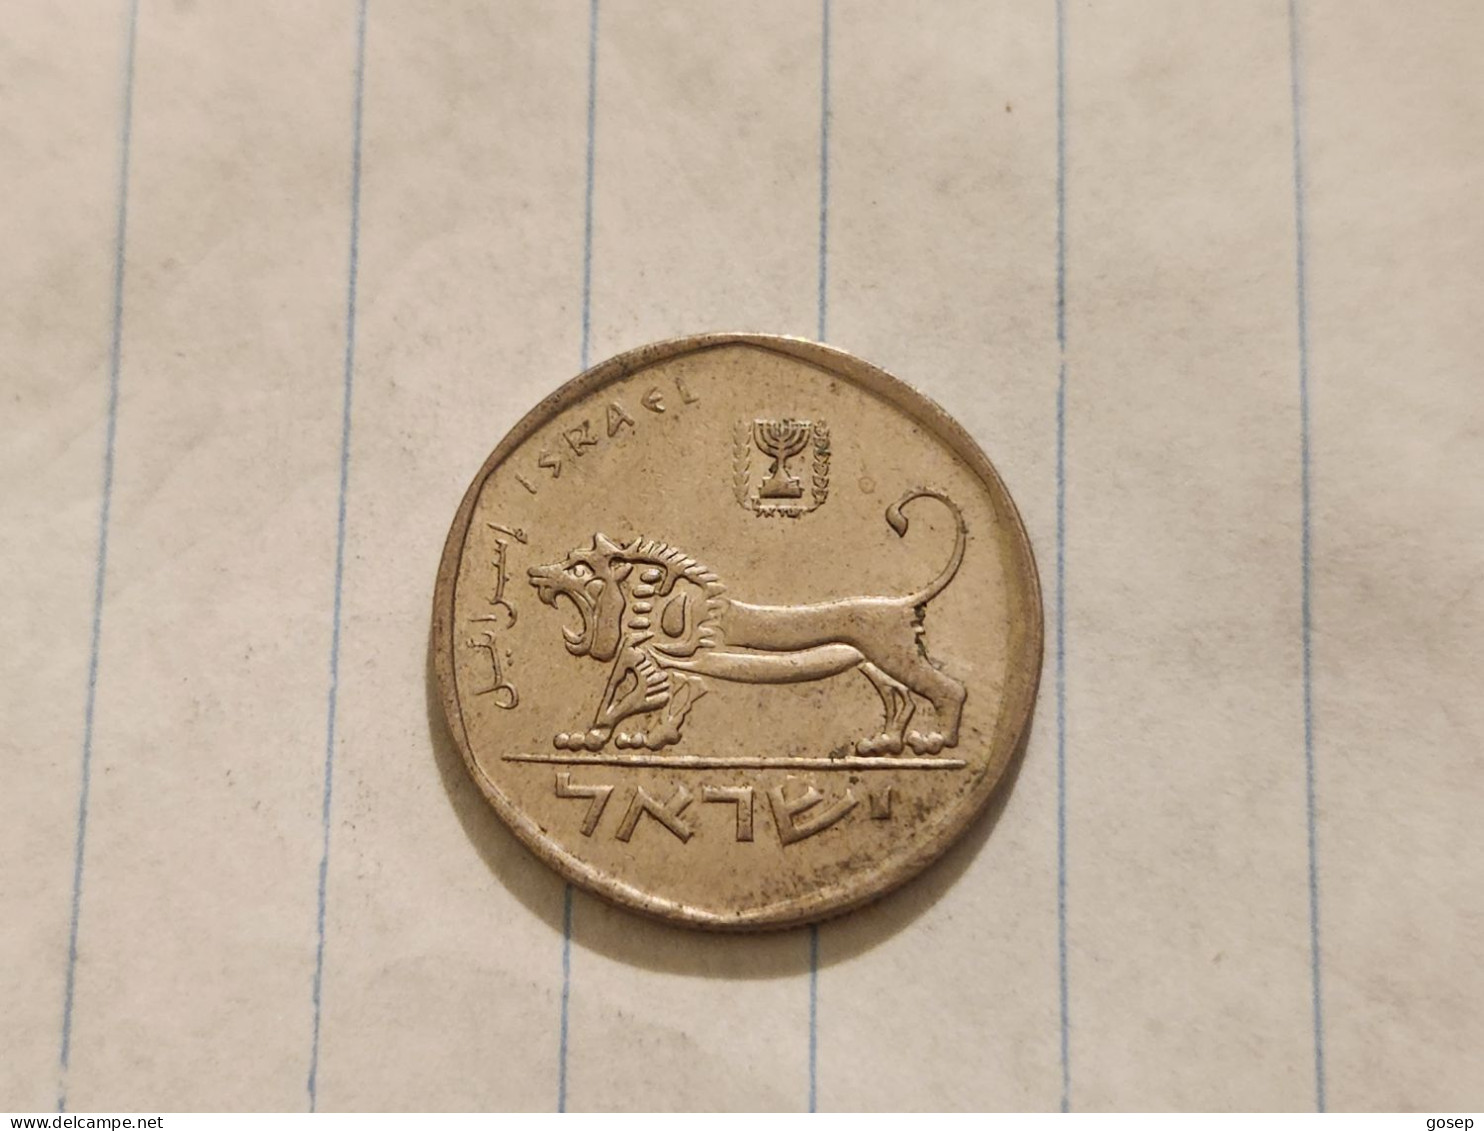 Israel-Coins-SHEKEL(1985-1981)-1/2 SHEKEL-Hapanka 32-(1982)-(28)-תשמ"ב-NIKEL-good - Israele